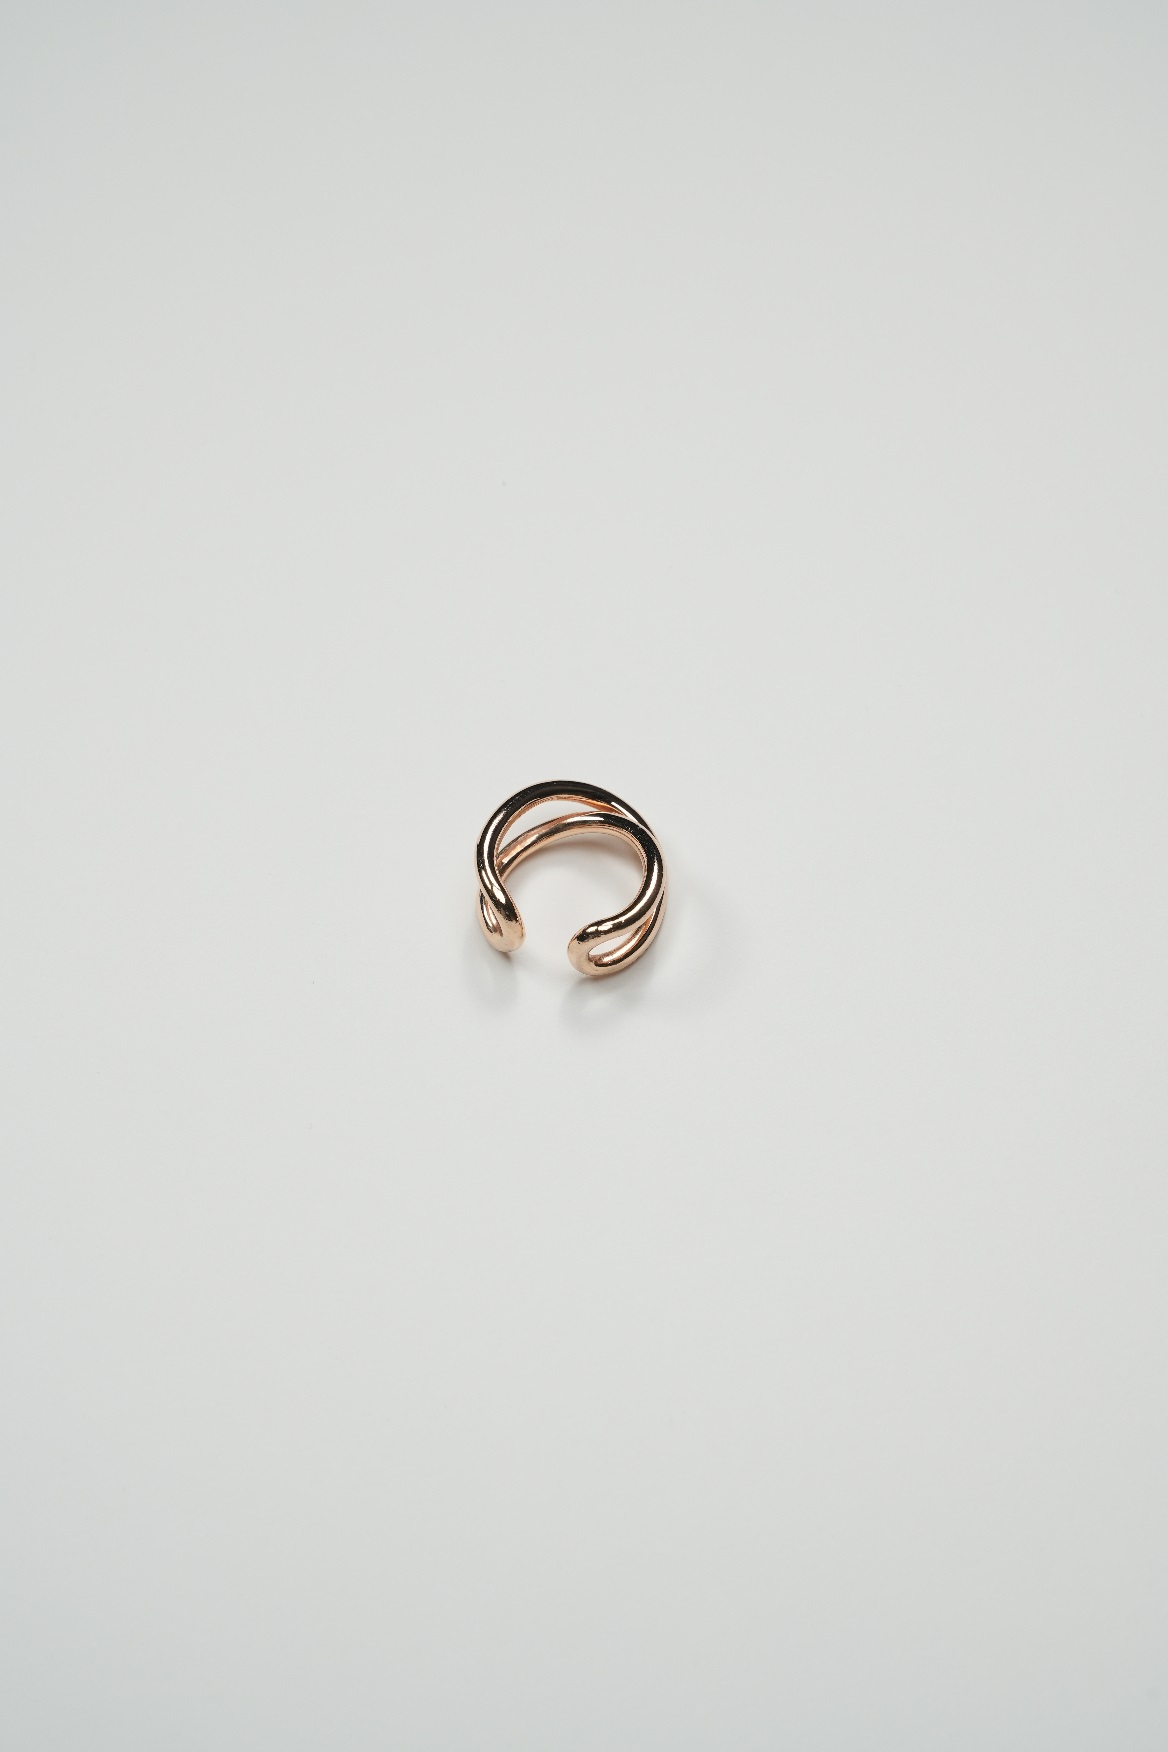 24K rose gold vermeil ring/earcuff in 925 silver